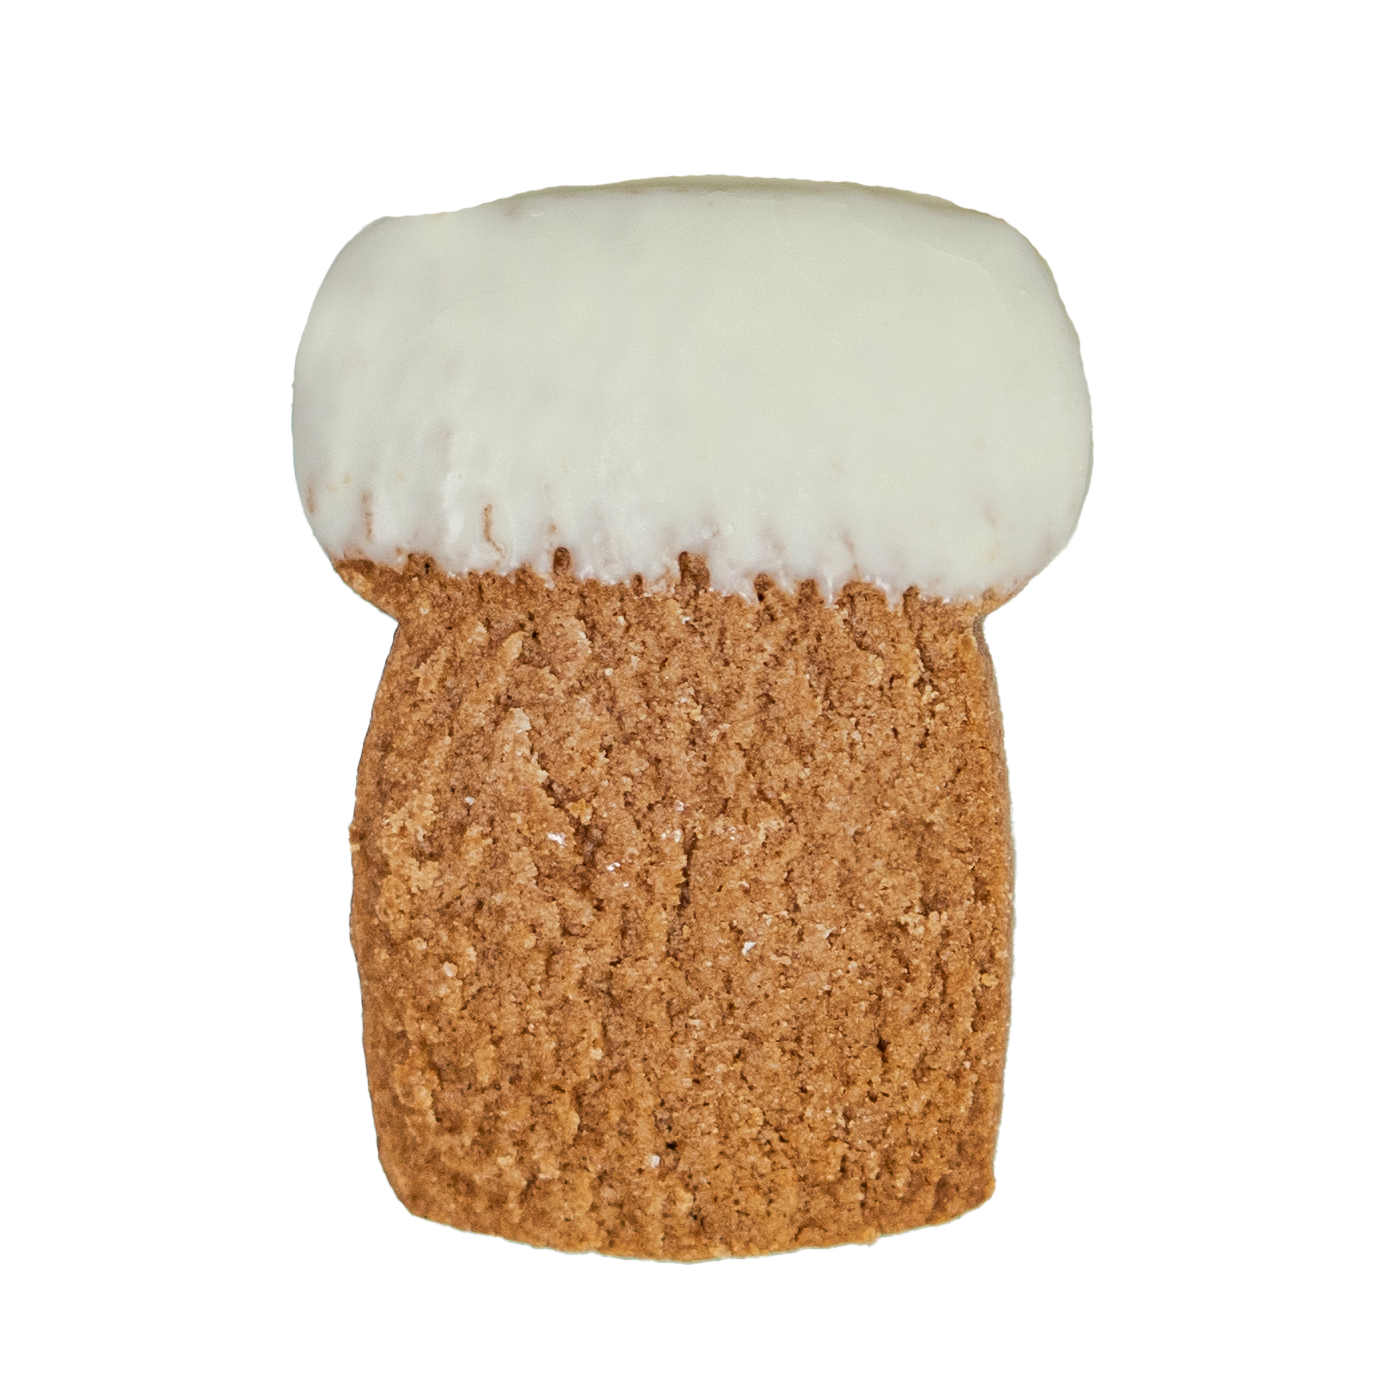 
                  
                    Small Latte Stone Cookie Box
                  
                